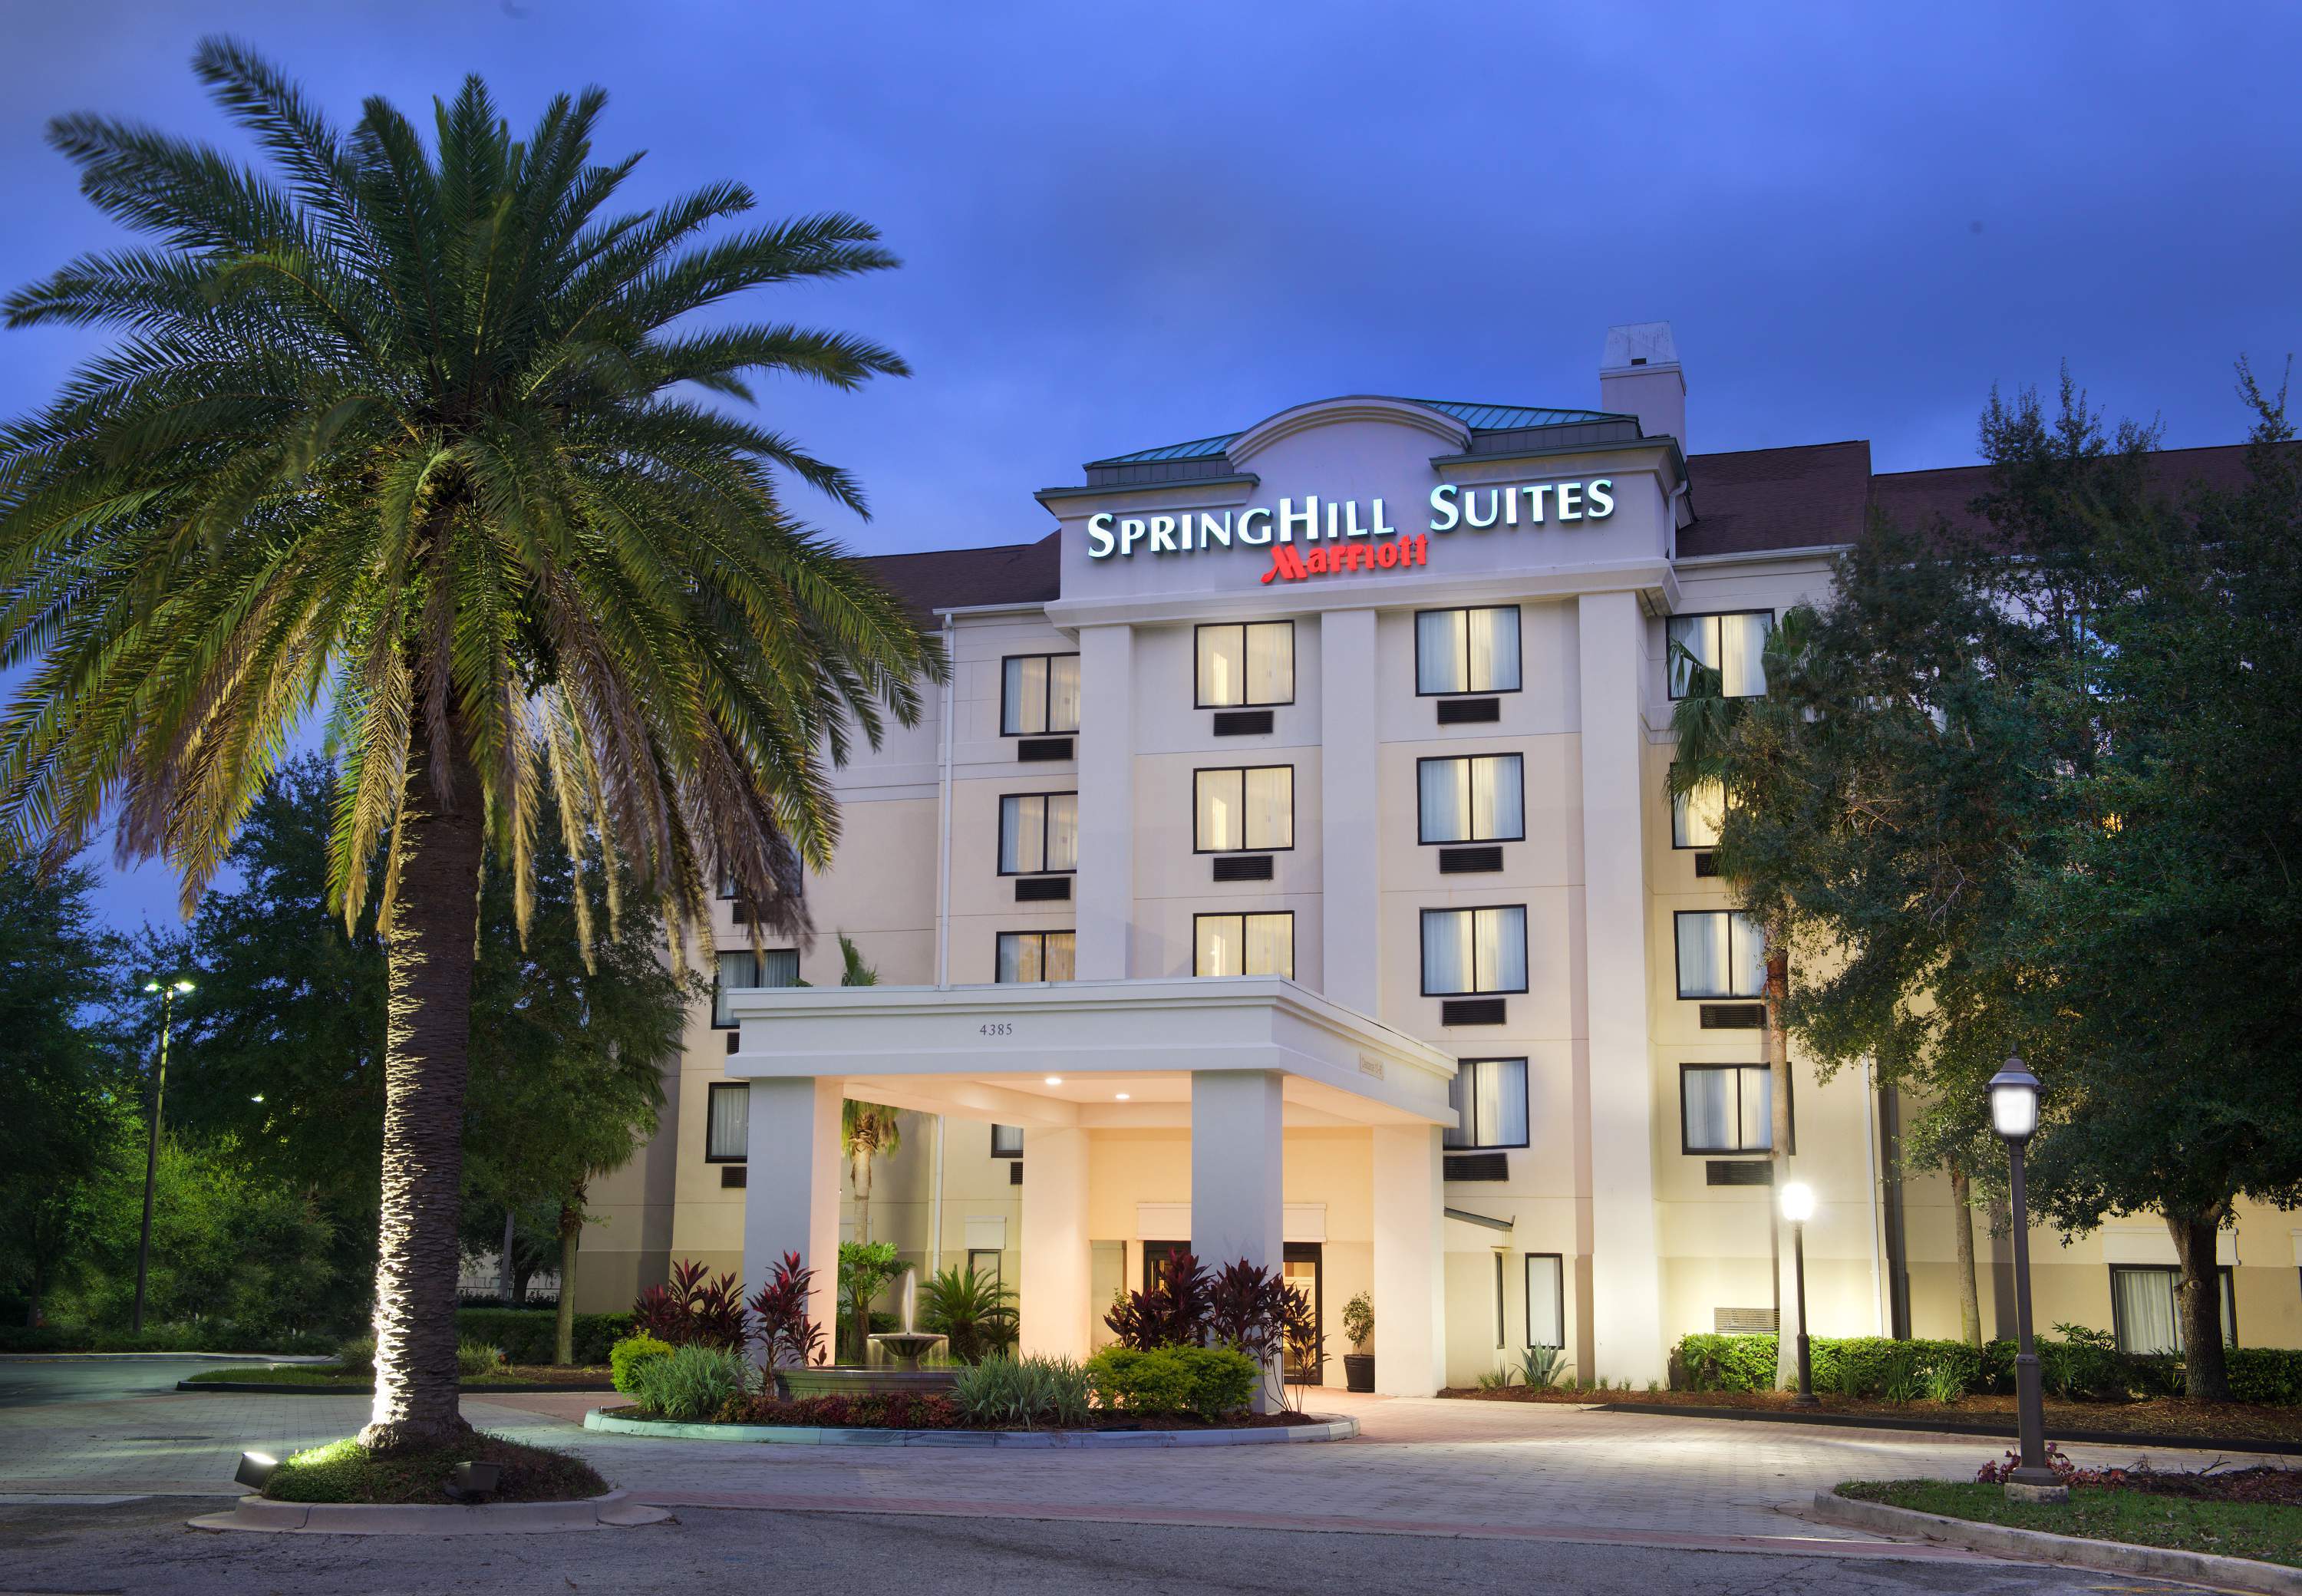 Photo of SpringHill Suites Jacksonville, Jacksonville, FL